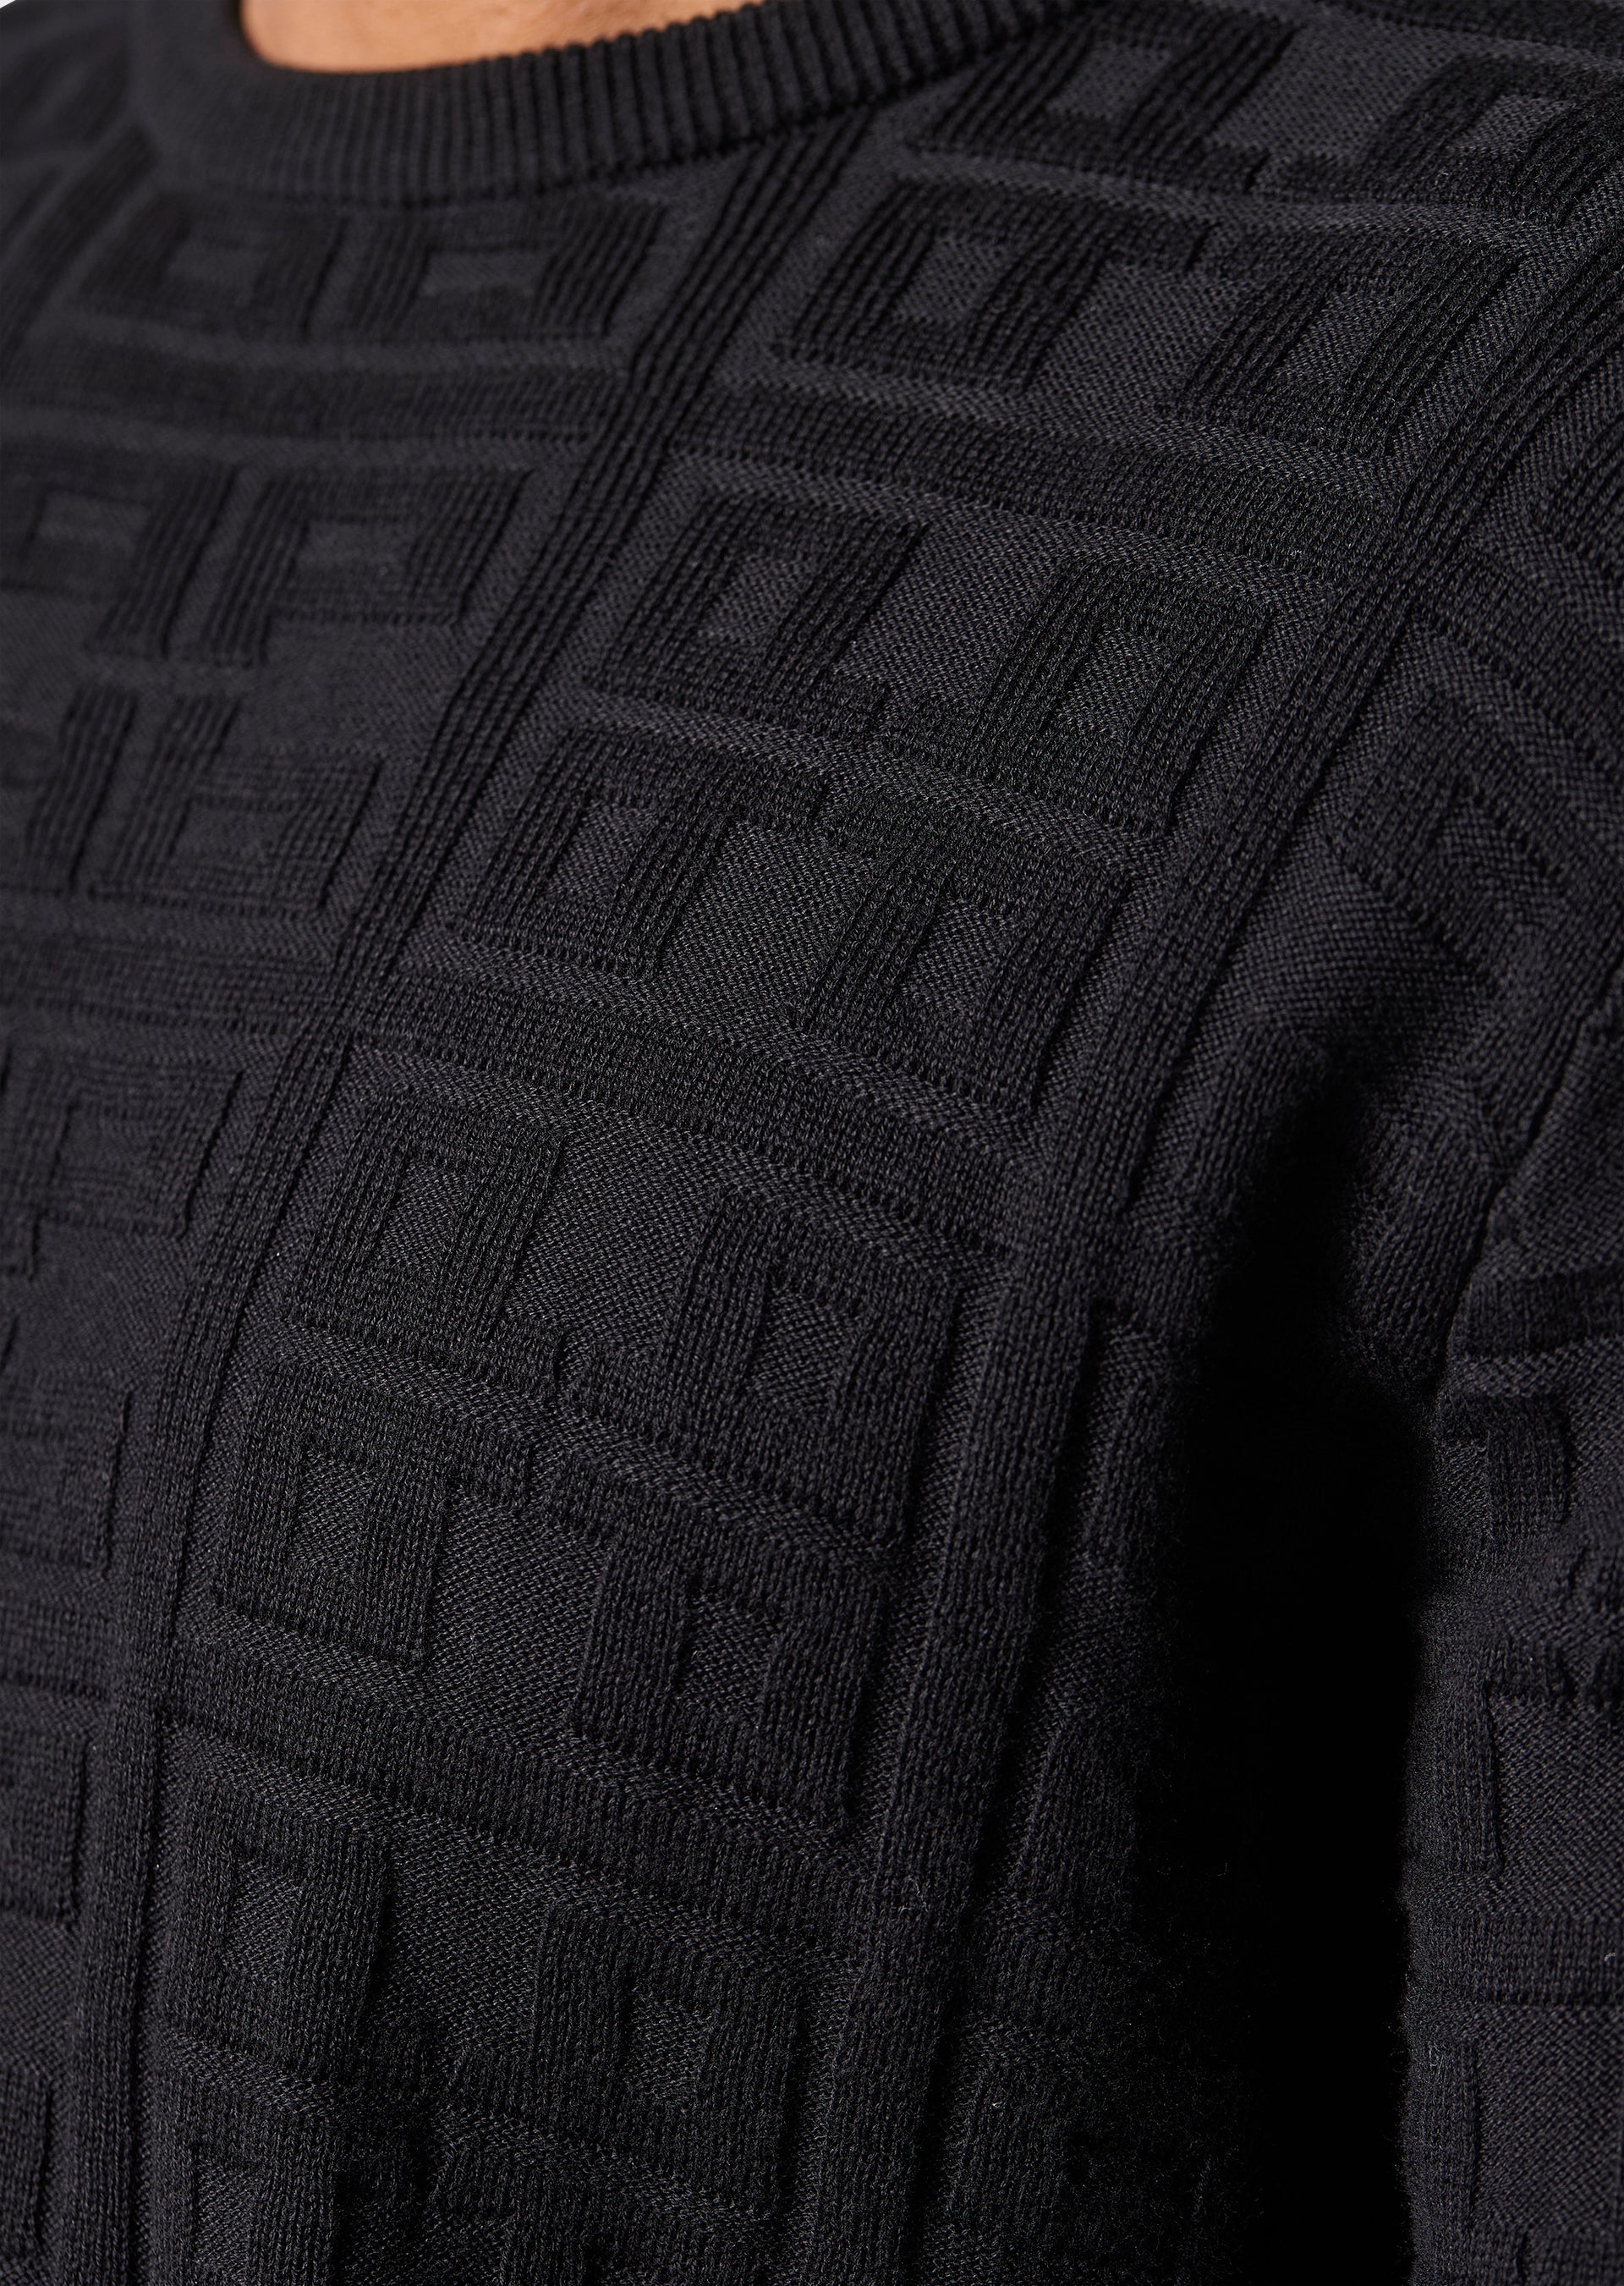 Divisa Black Knitted Sweatshirt – 883 Police